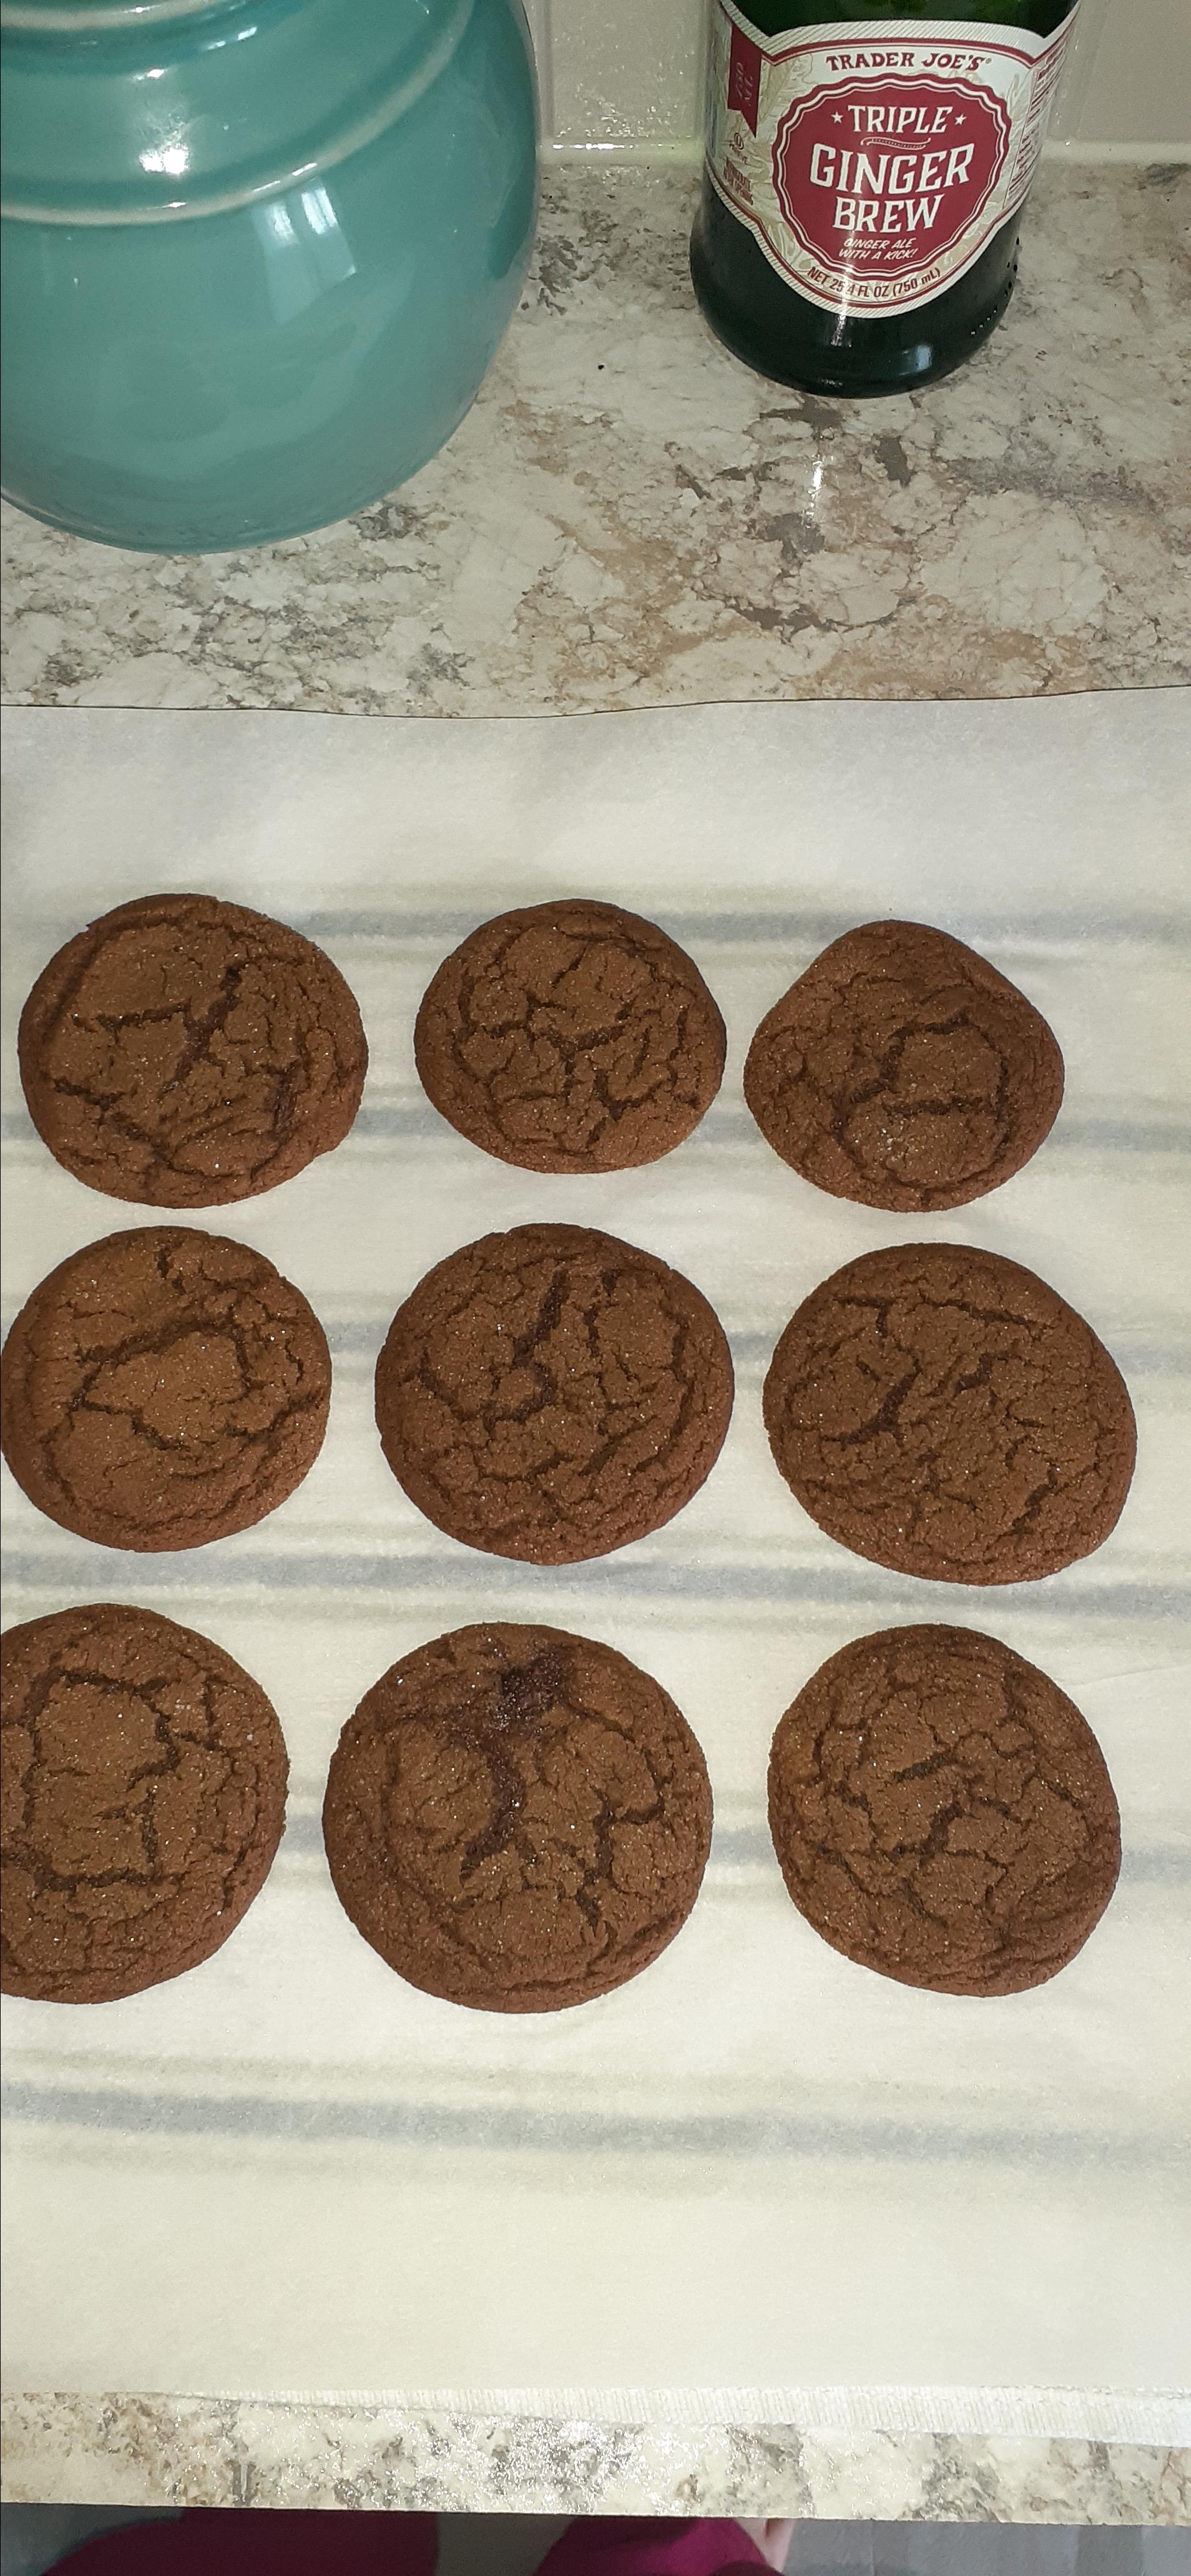 Molasses Cookies 